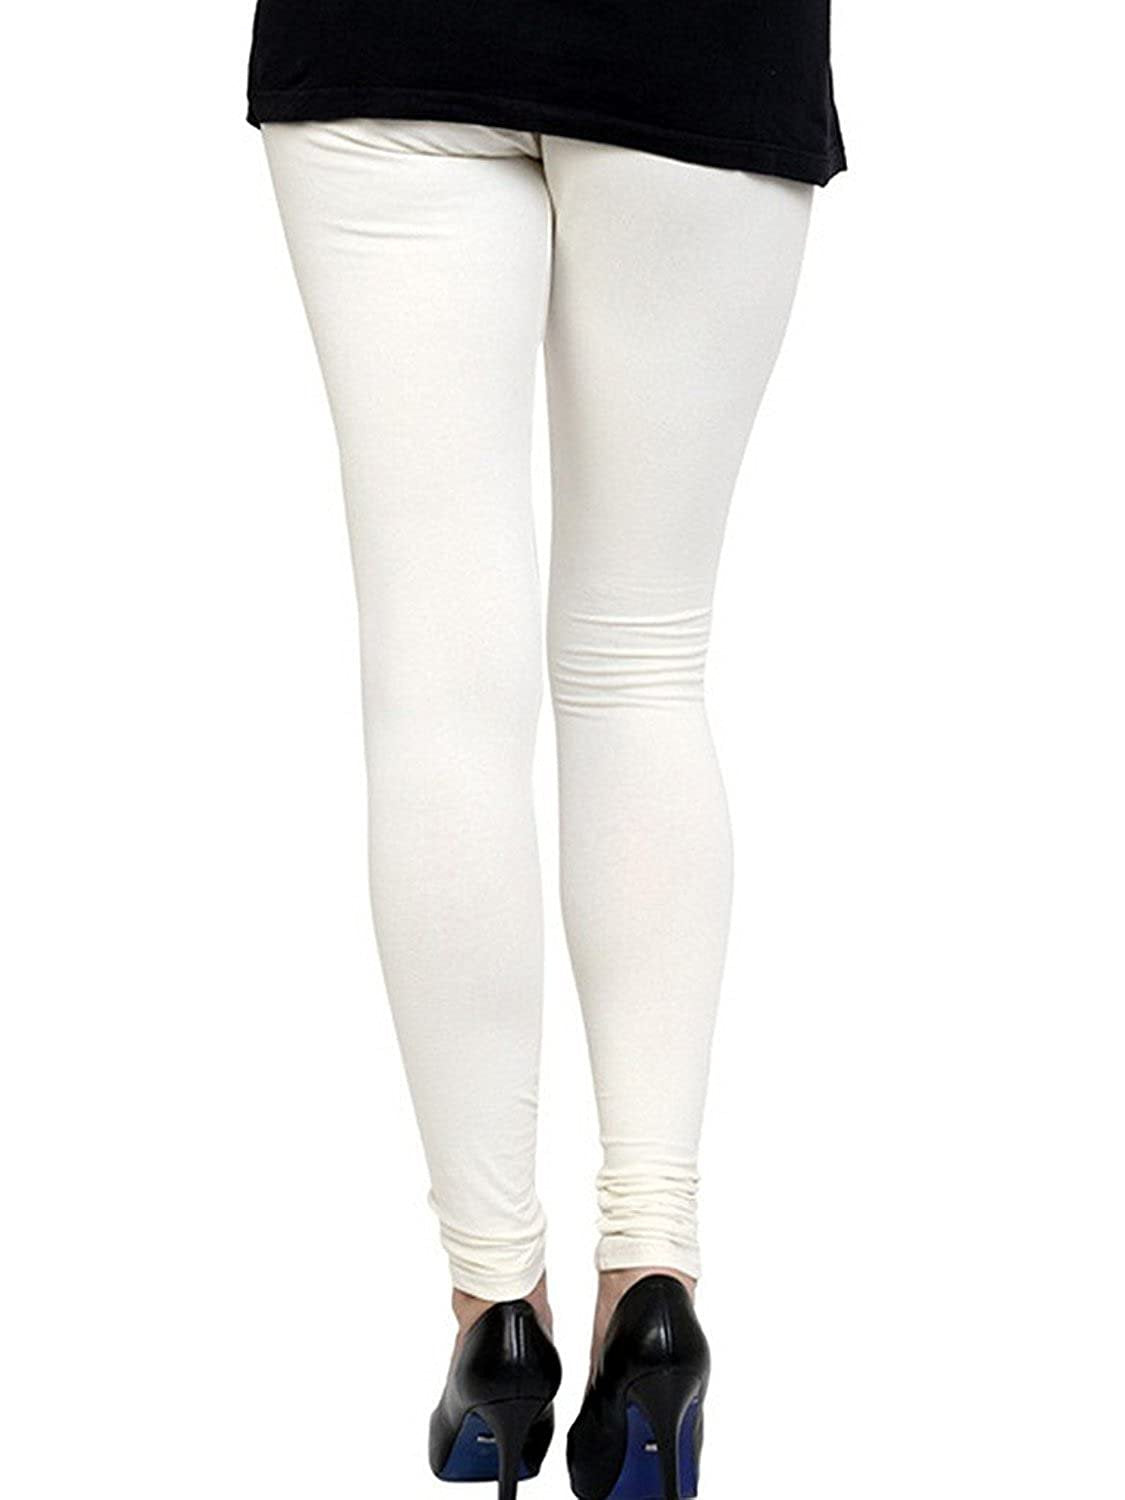 LUX LYRA Women's Cotton Churidar And Ankle Length Leggings Dark Pink | eBay